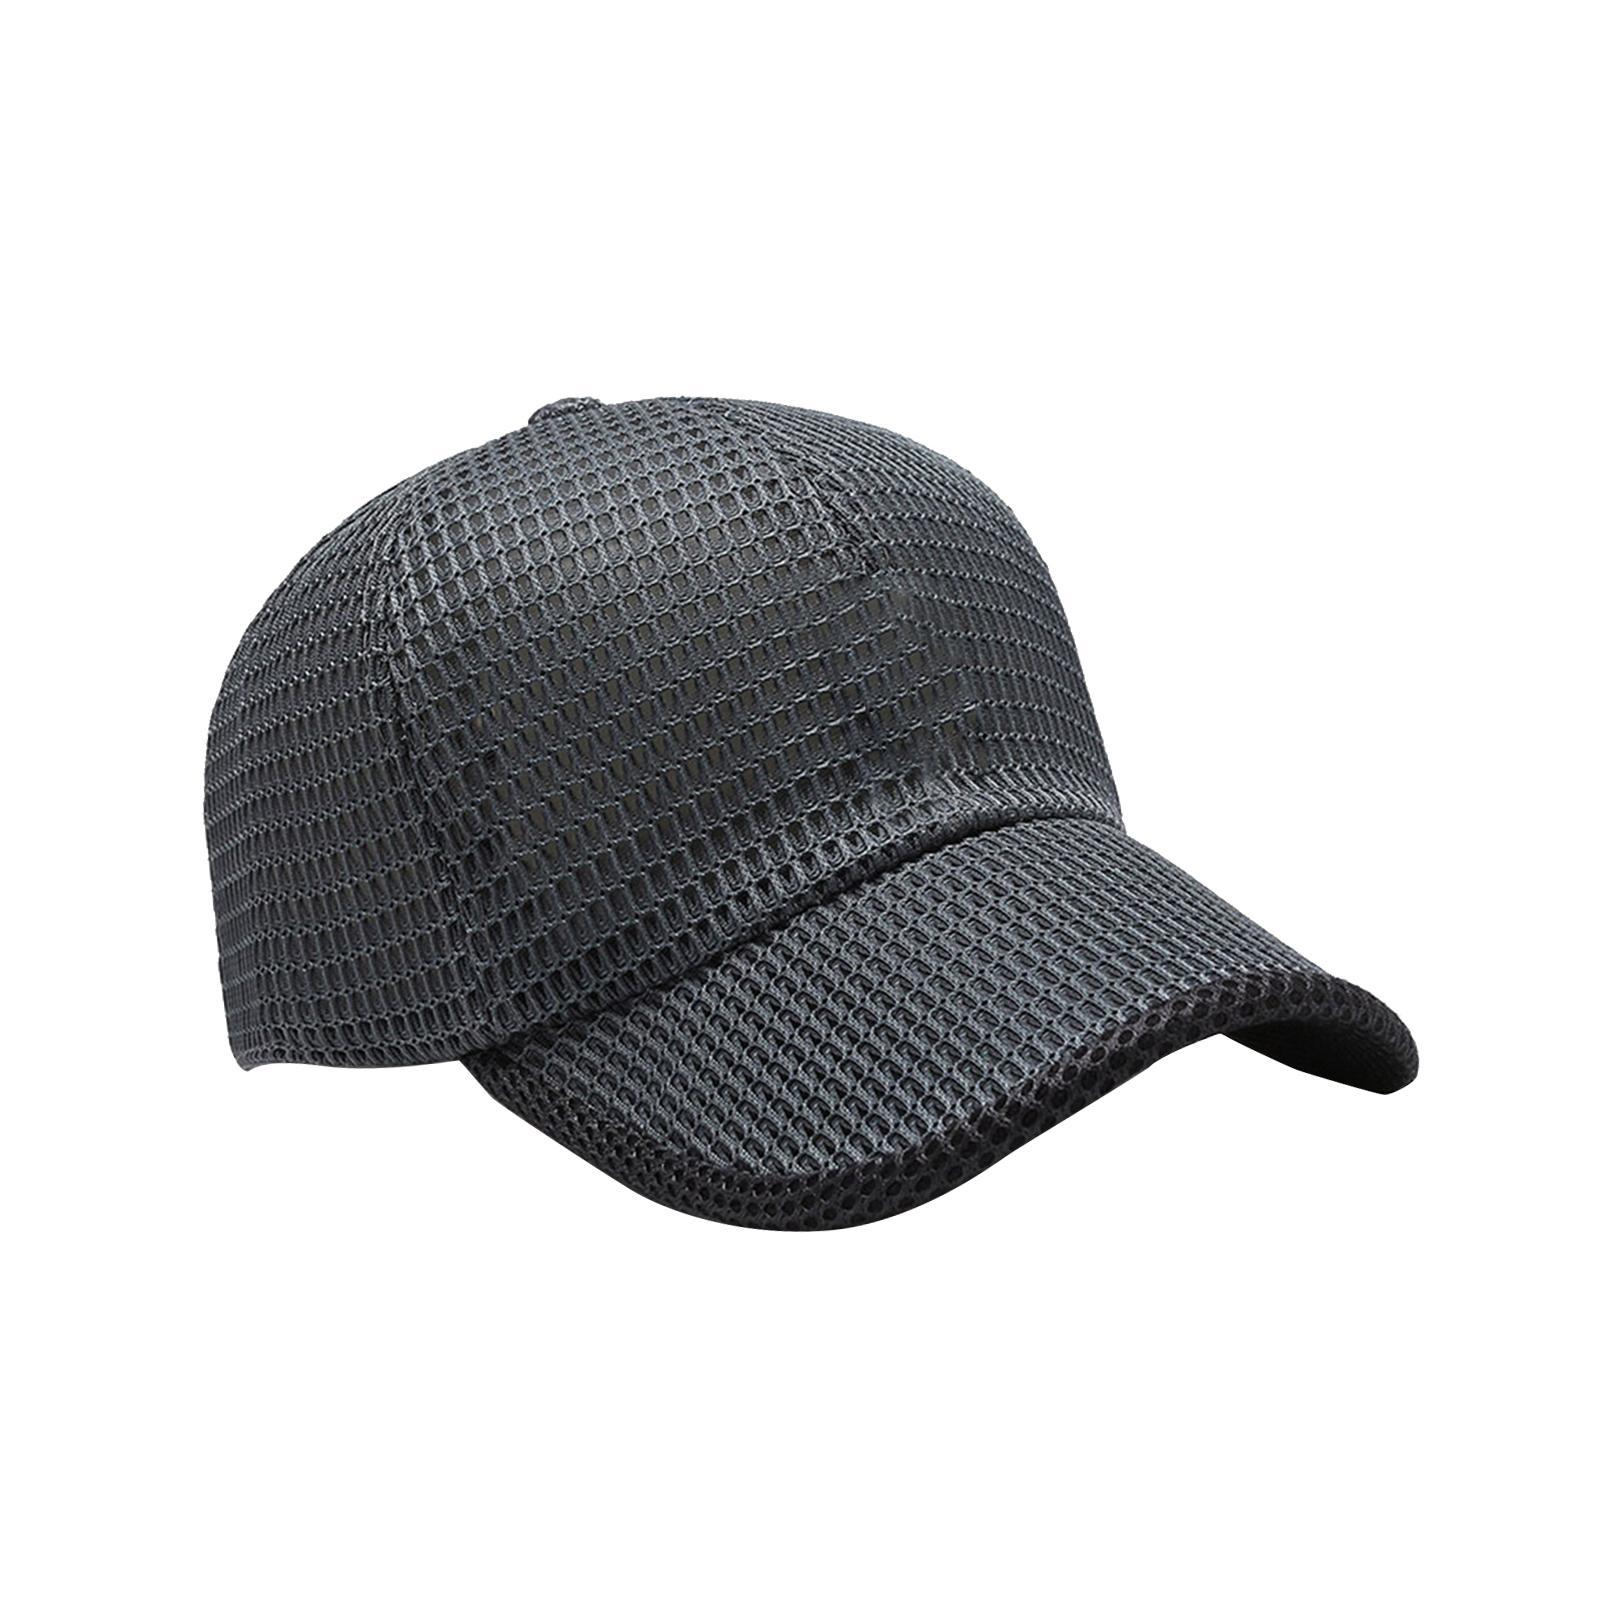 Baseball Cap Adjustable Size Sun Hat Baseball Hats for Sports Fishing Hiking